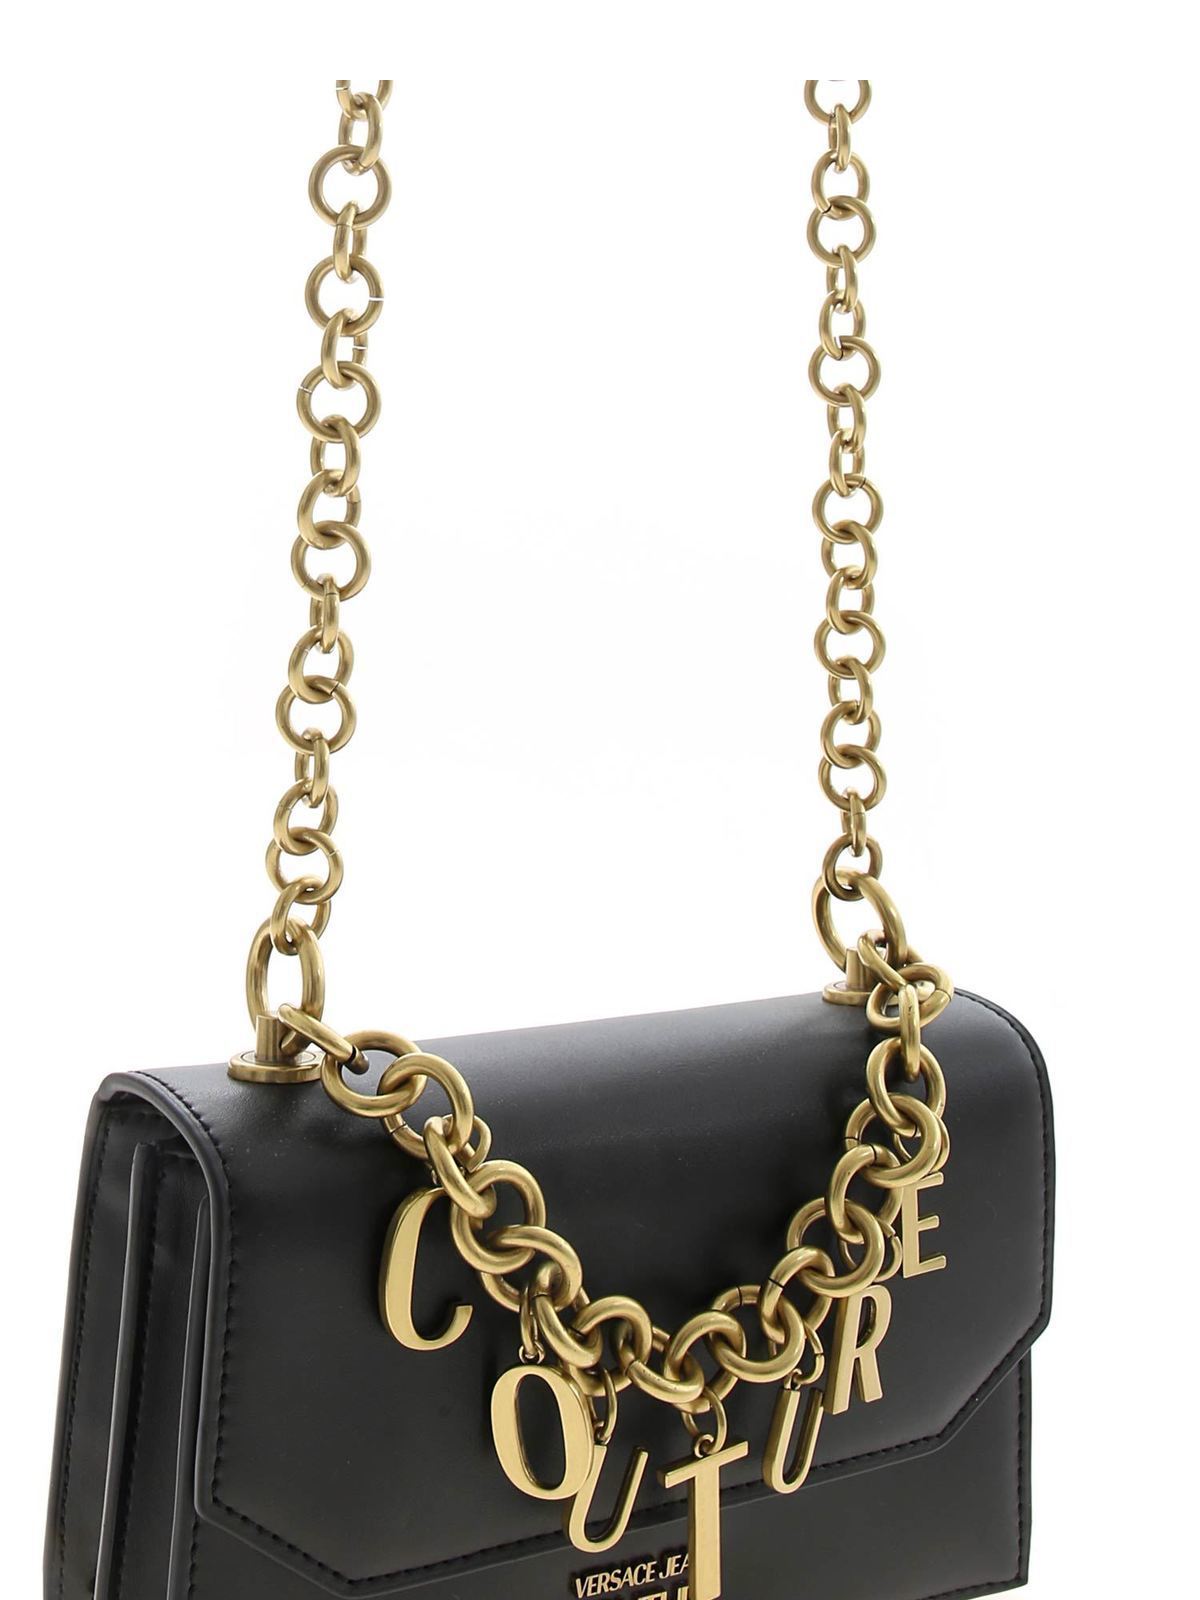 Minnie Keychains | Bag Charms